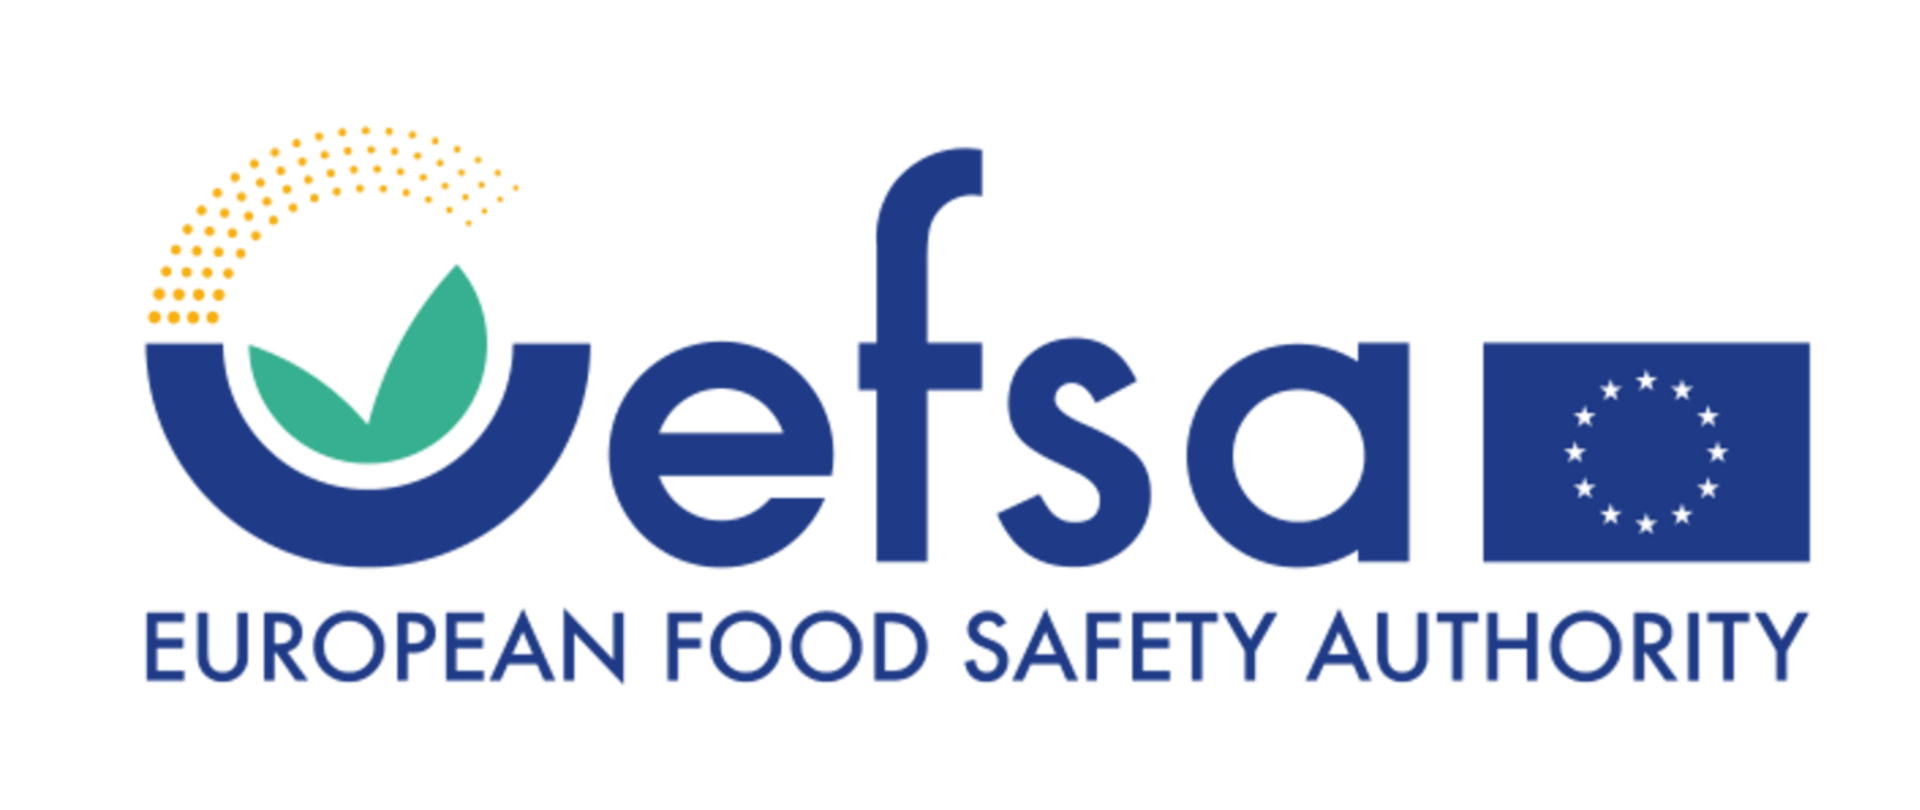 EFSA EUROPEAN FOOD SAFETY AUTHORITY